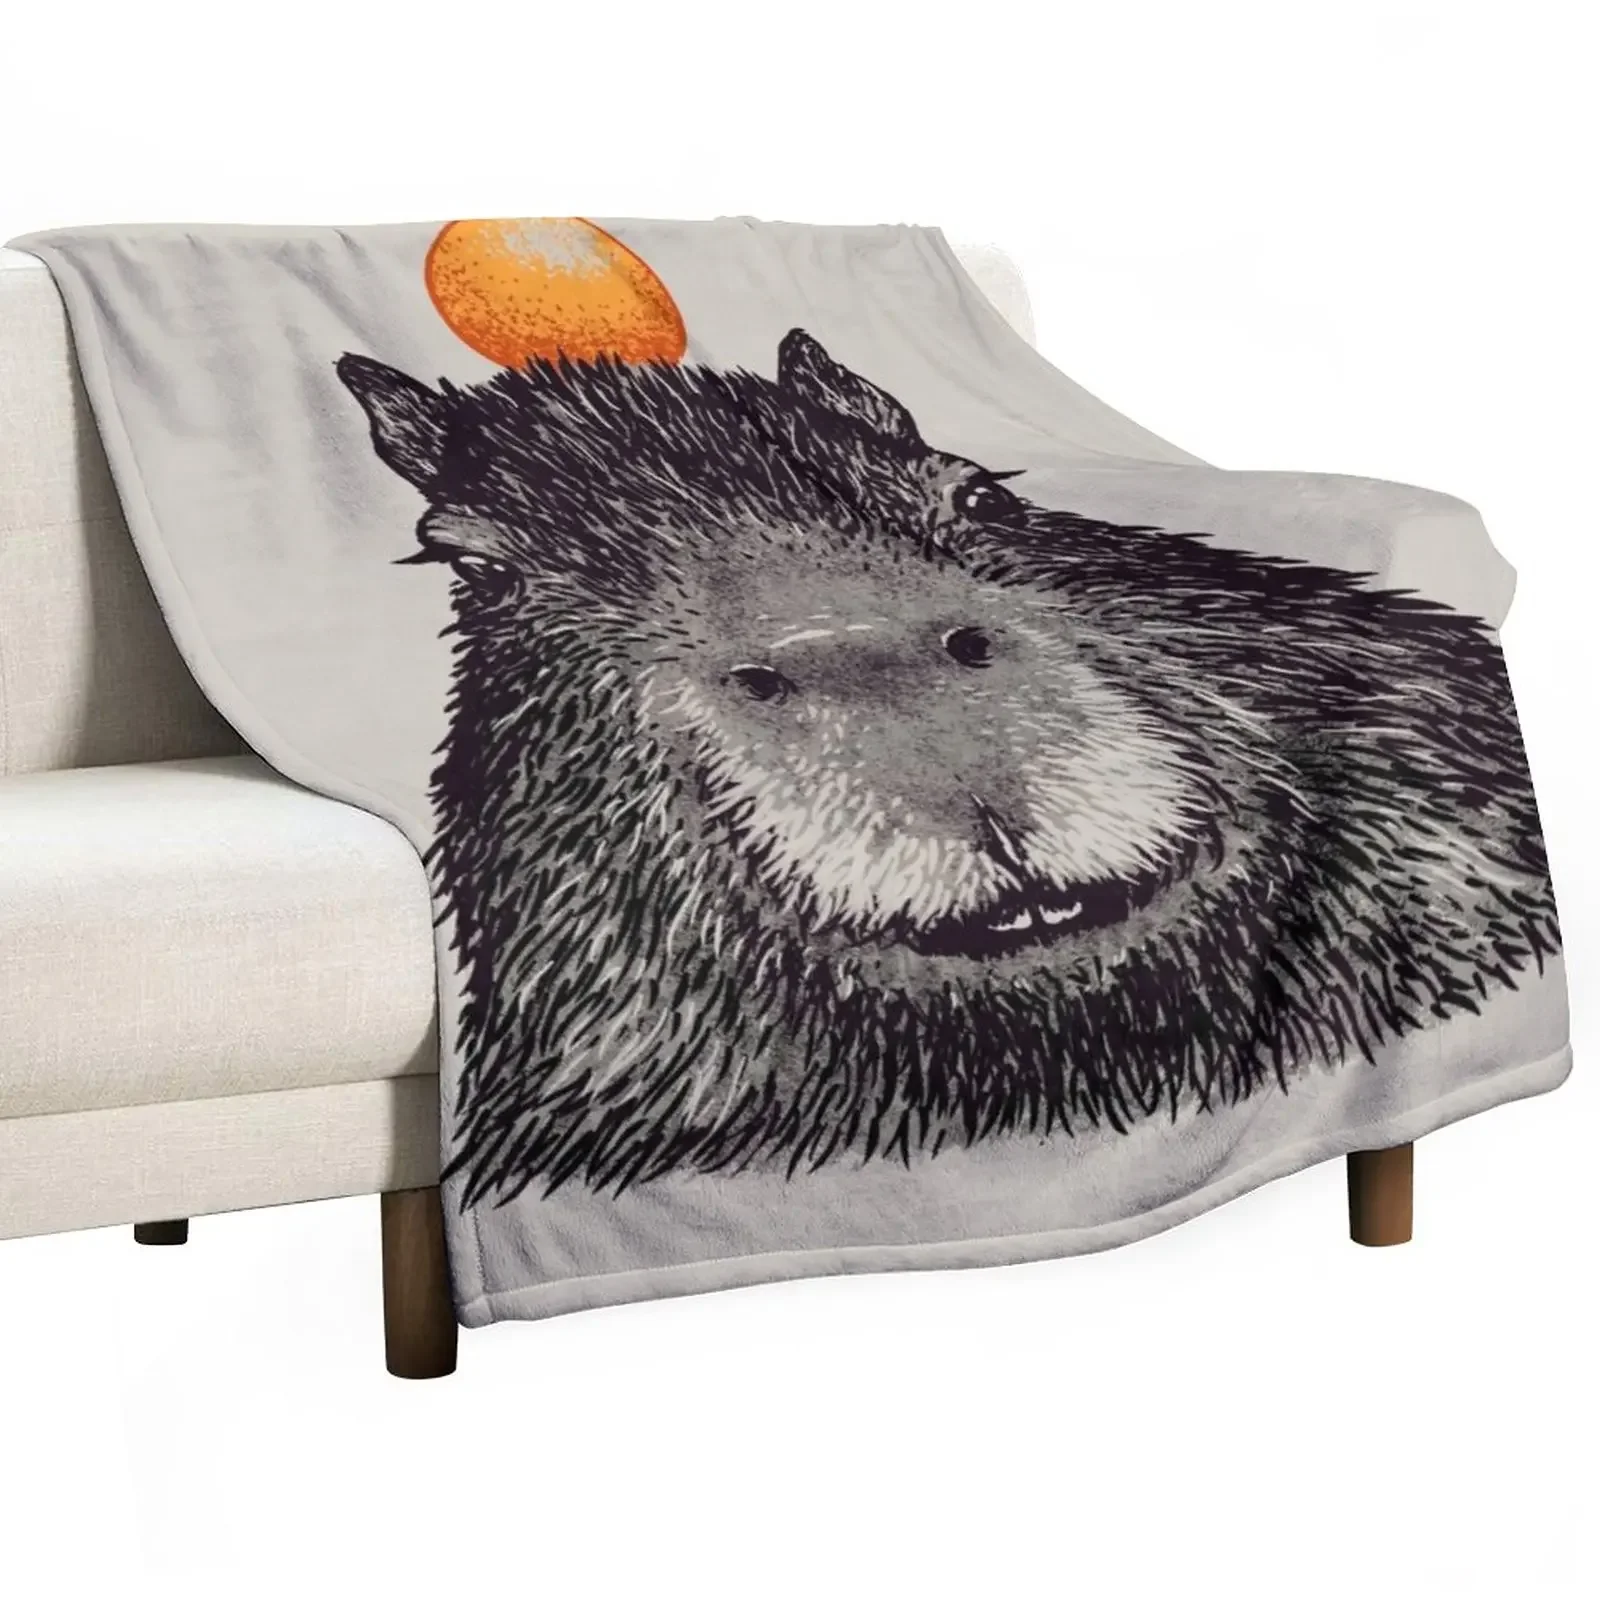 

CapybaraOrange | Capy Yuzu | Capybara with Orange on Head | His Name - Gort Portrait Throw Blanket Bed linens Blankets